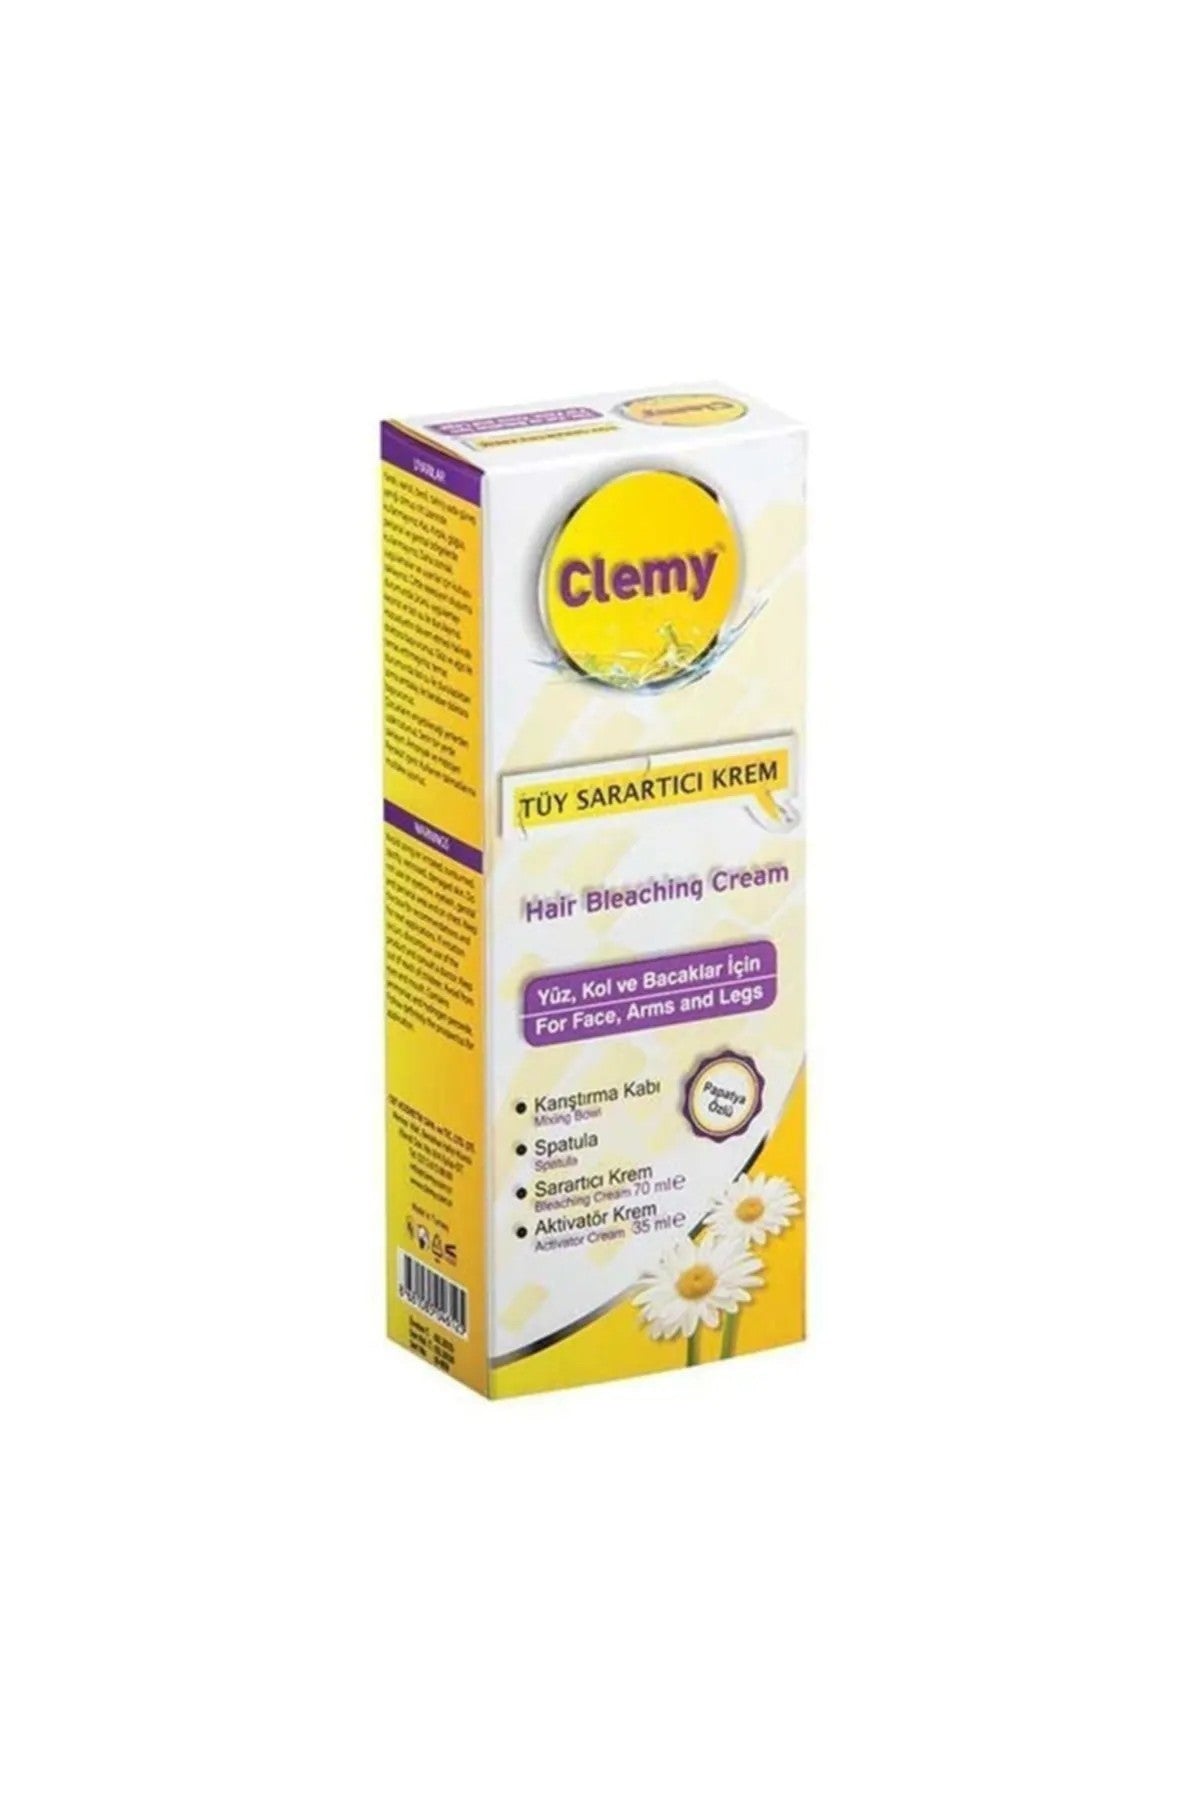 Clemy Feather Lightening Cream